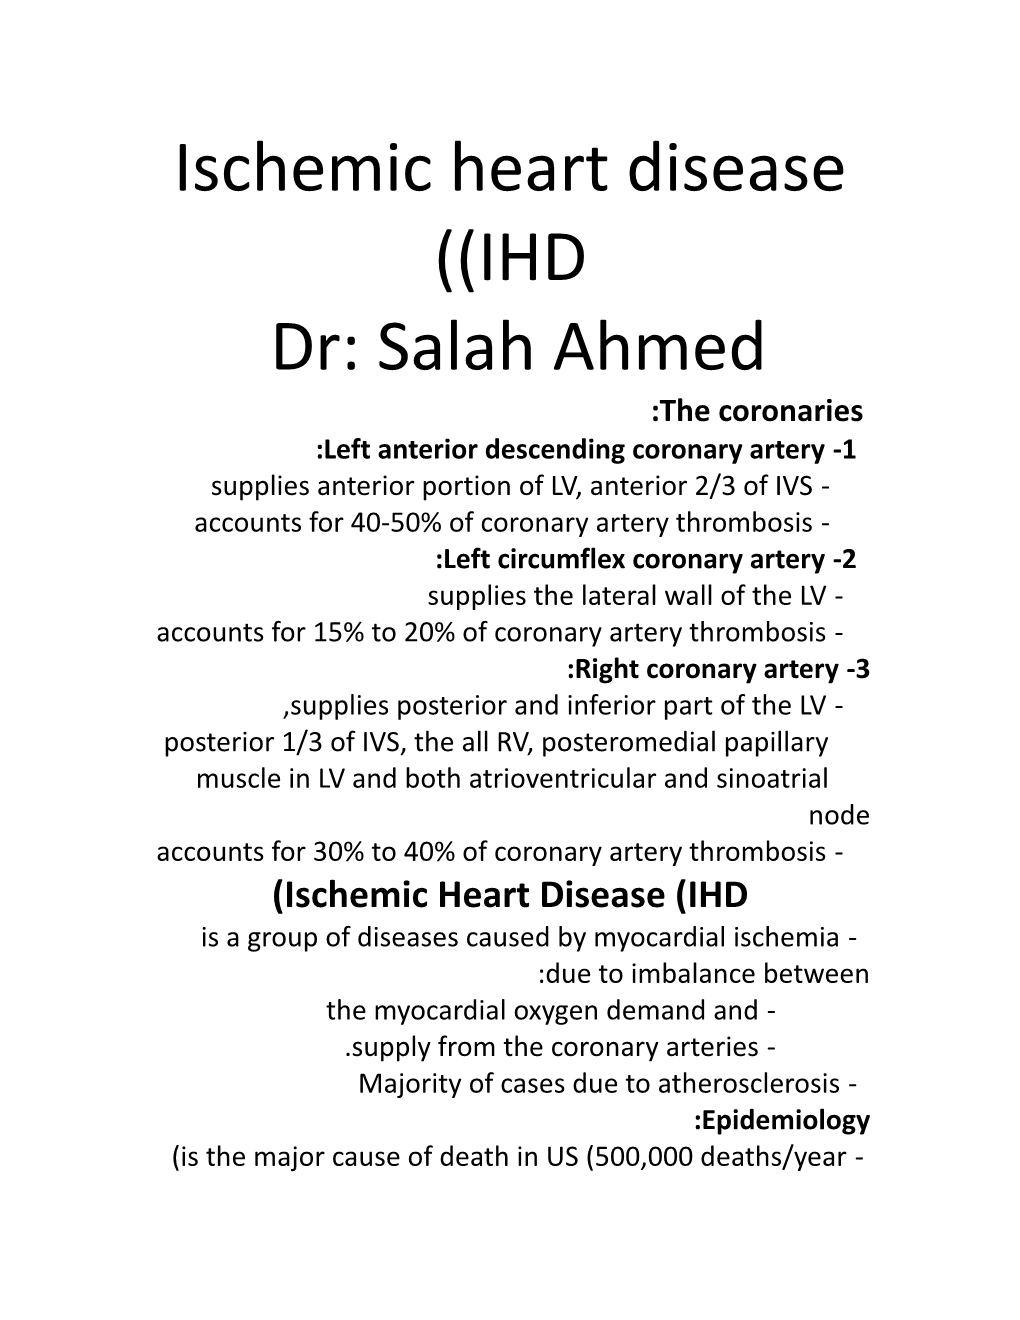 Ischemic Heart Disease (IHD)